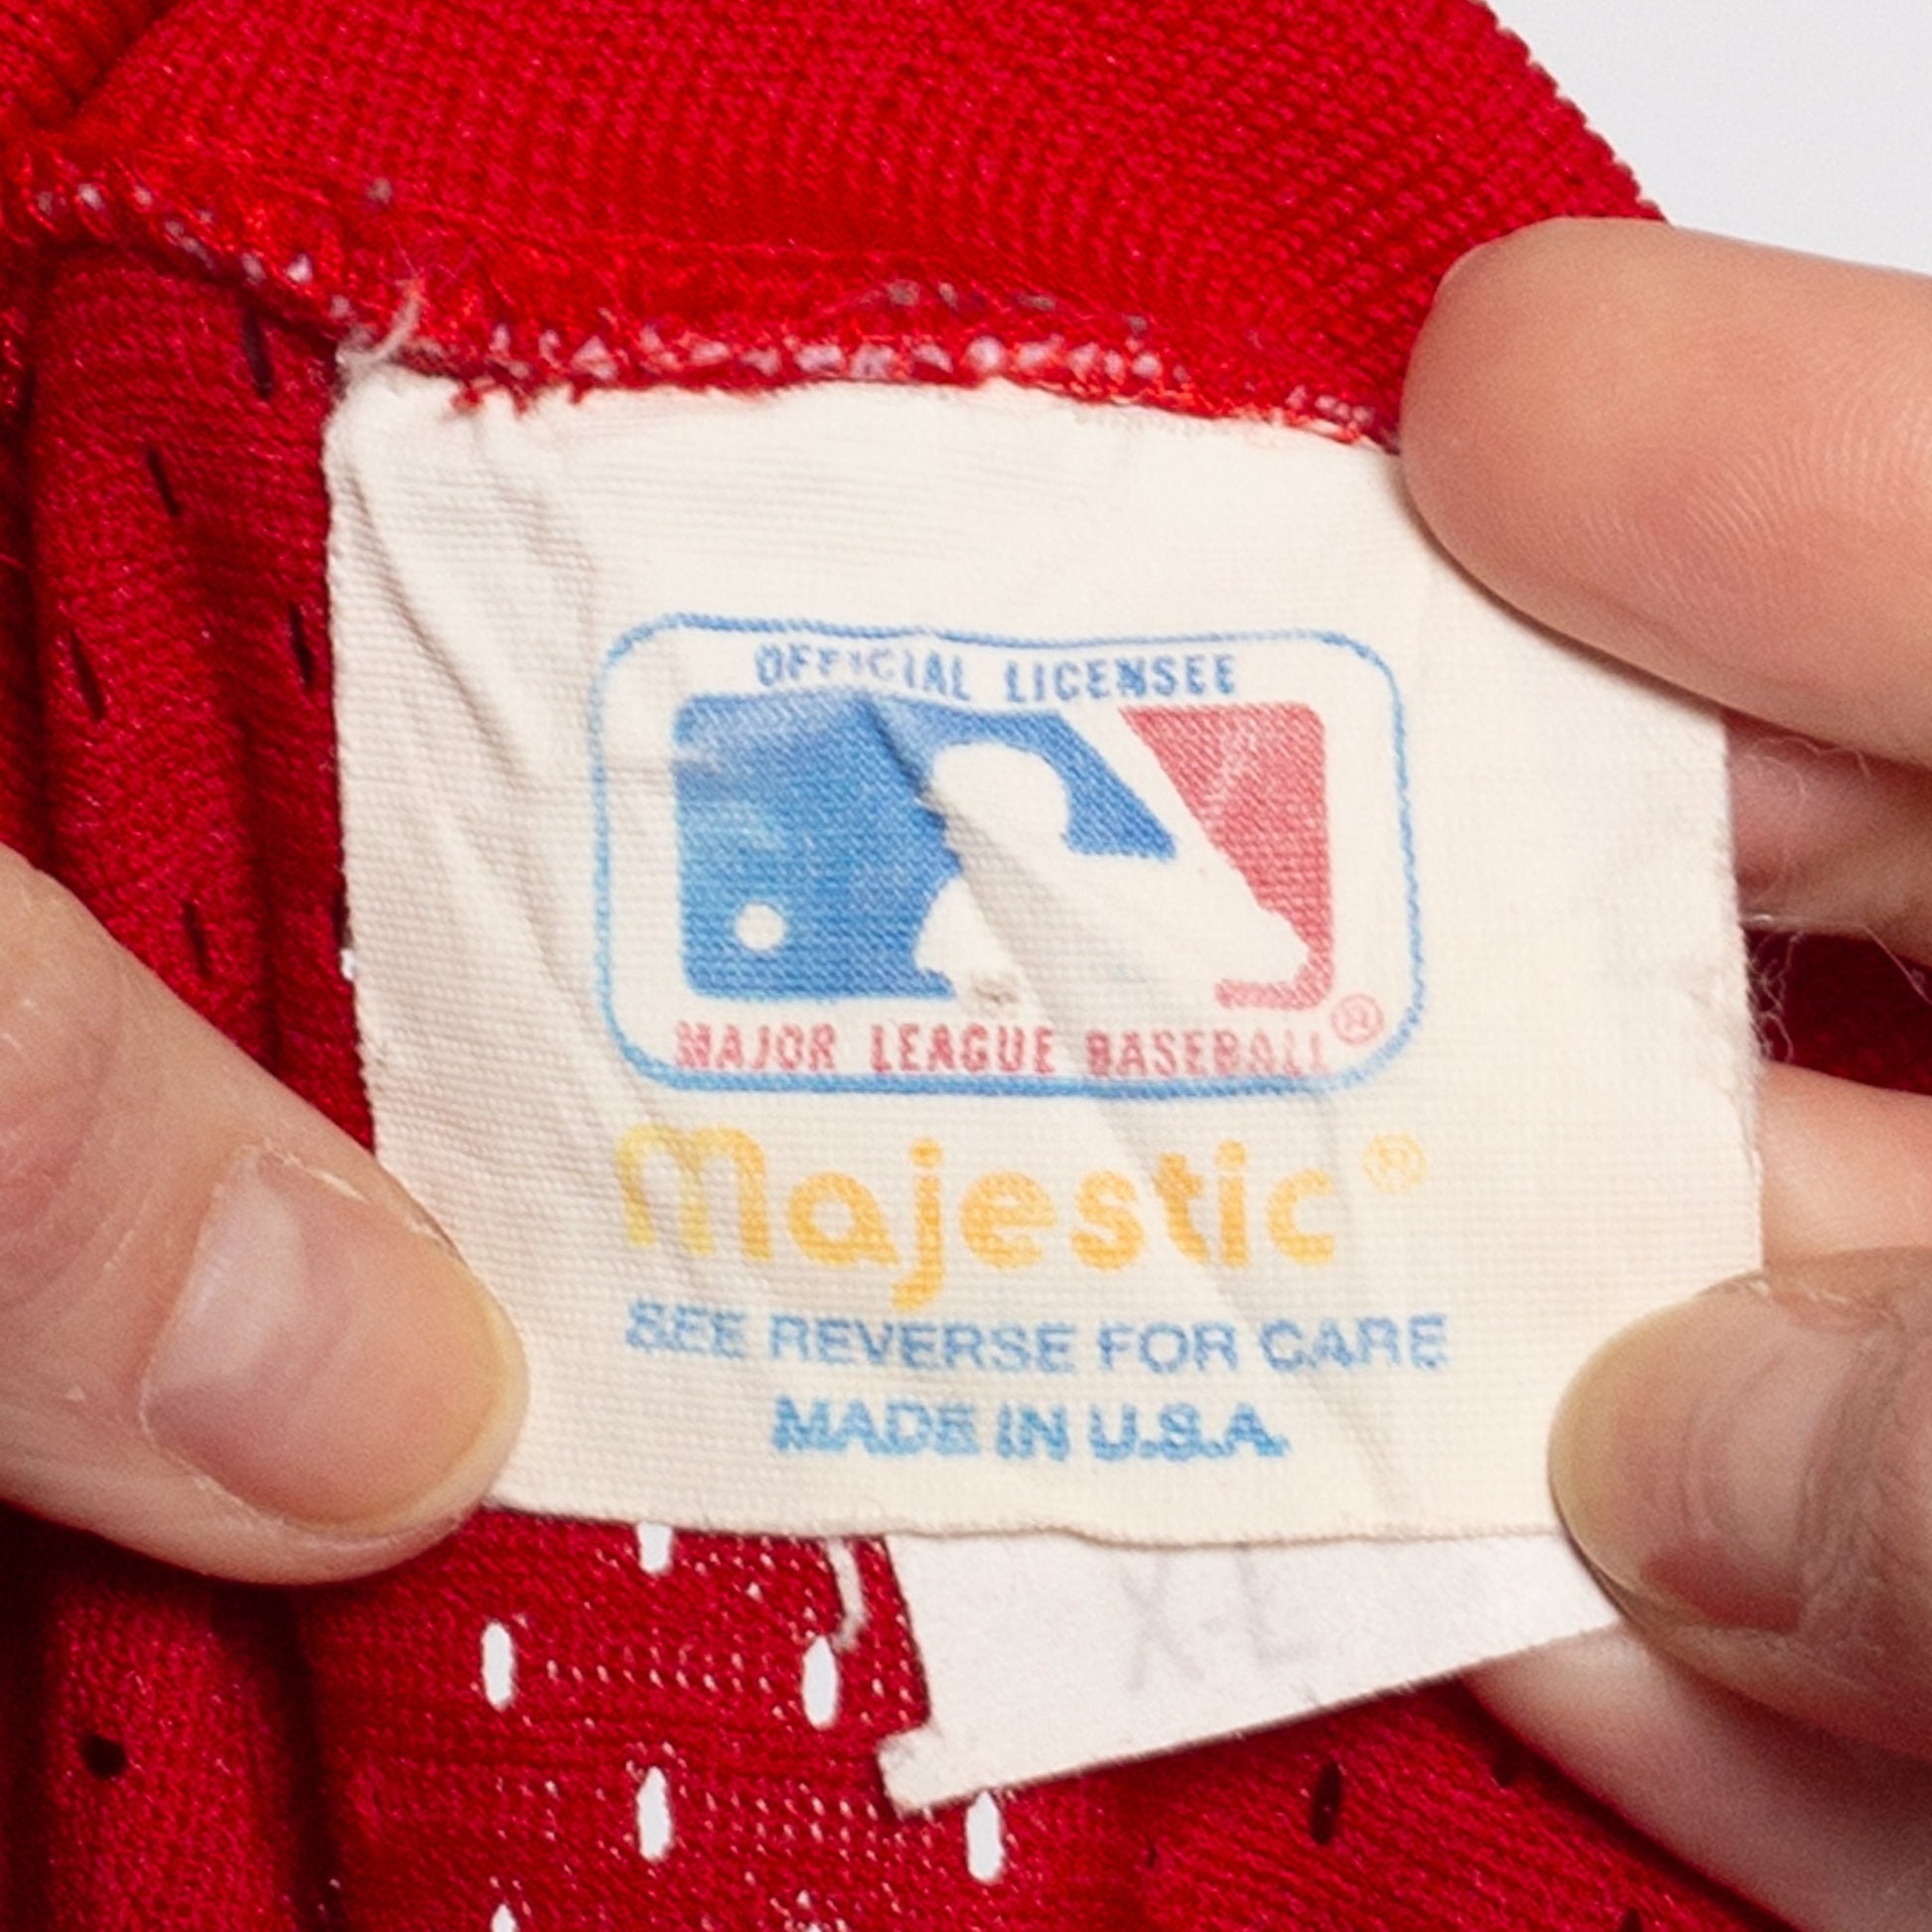 XL 90s Cincinnati Reds MLB Baseball Jersey | Vintage Majestic Mesh Streetwear Athletic Uniform Shirt